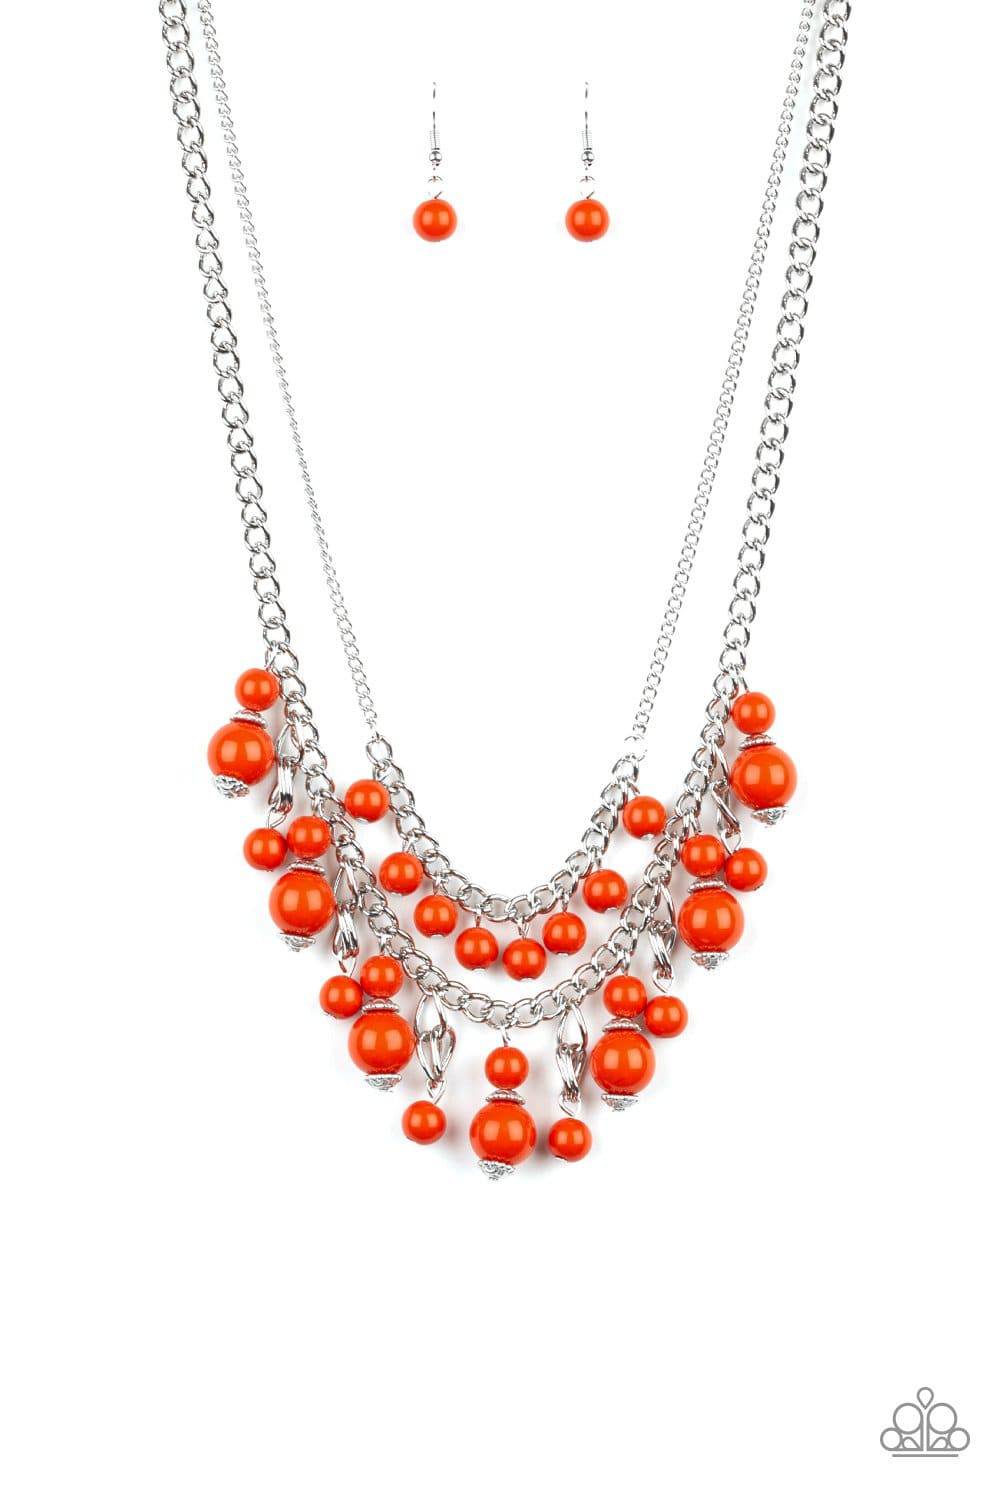 Beautifully Beaded - Orange Bead Necklace - Paparazzi Accessories - GlaMarous Titi Jewels